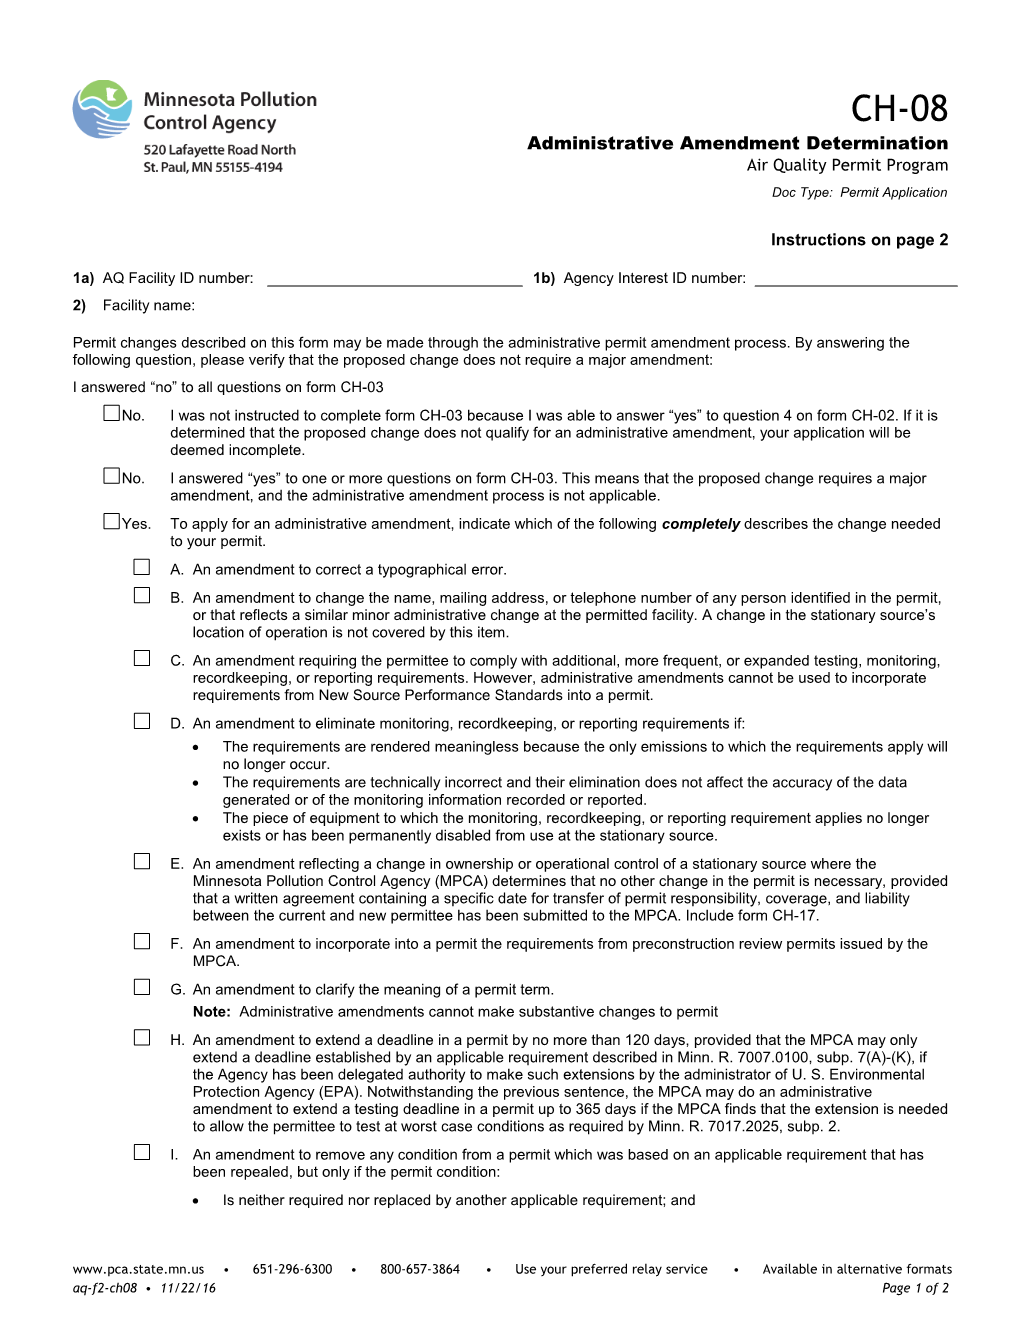 CH-08 Administrative Amendment Determination - Air Quality Permit Program - Form